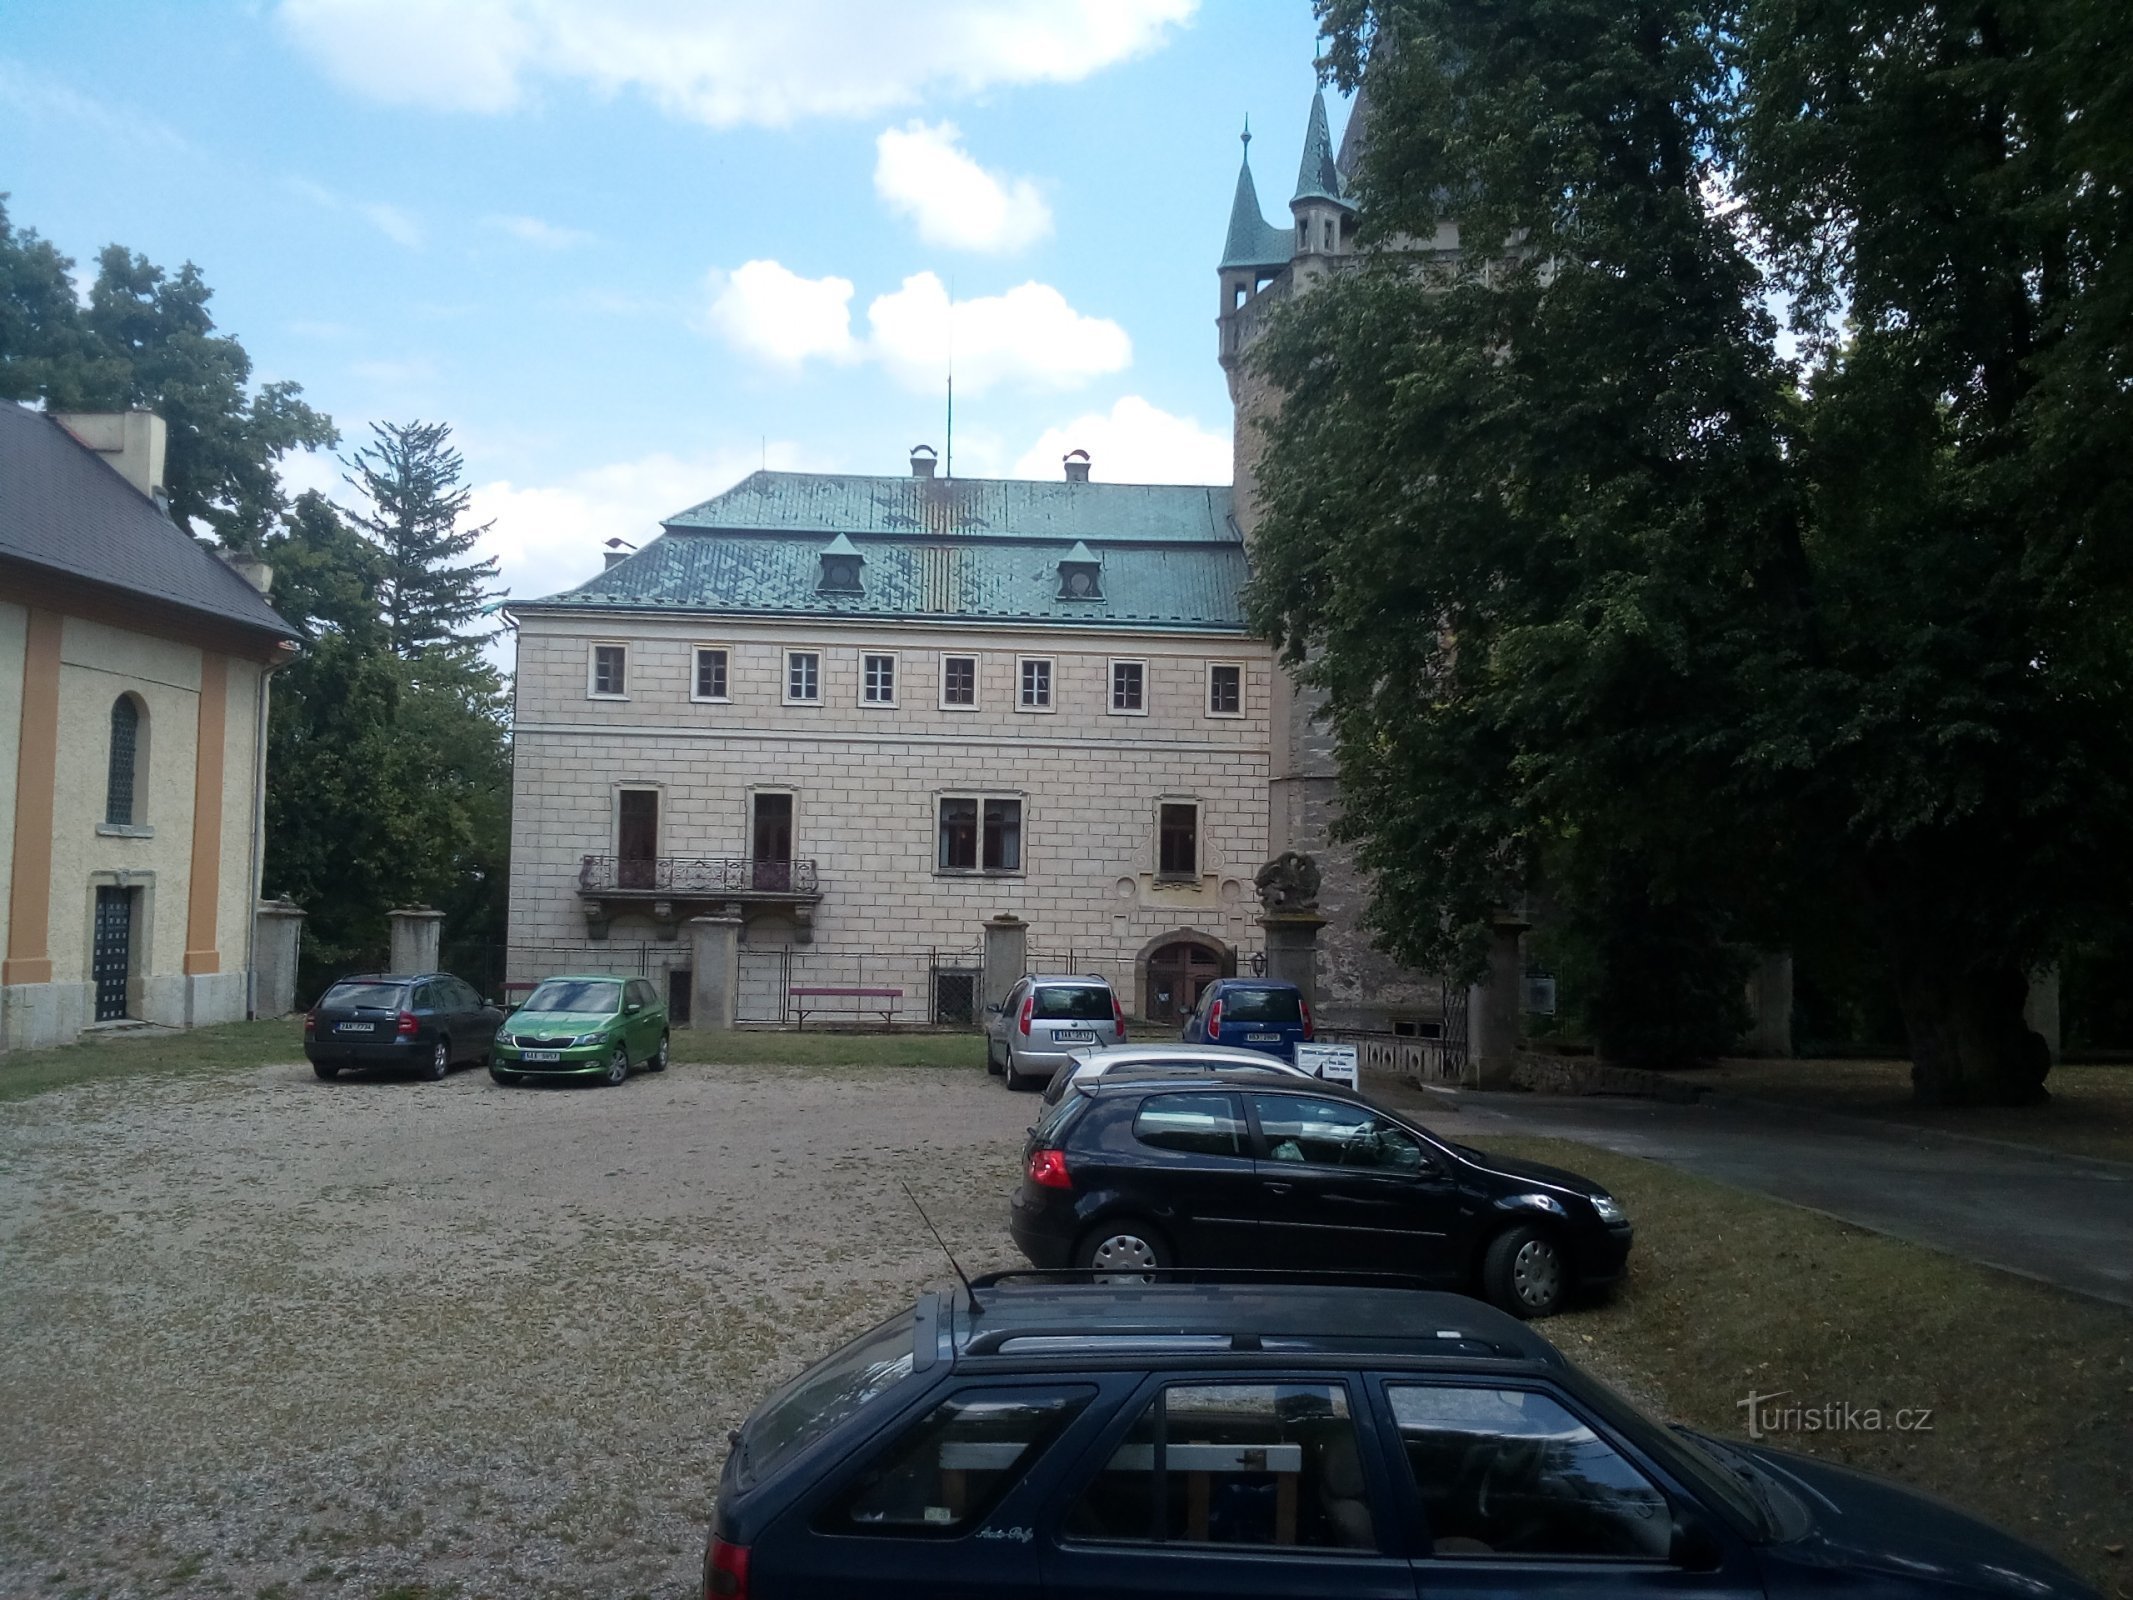 Stránovs slott